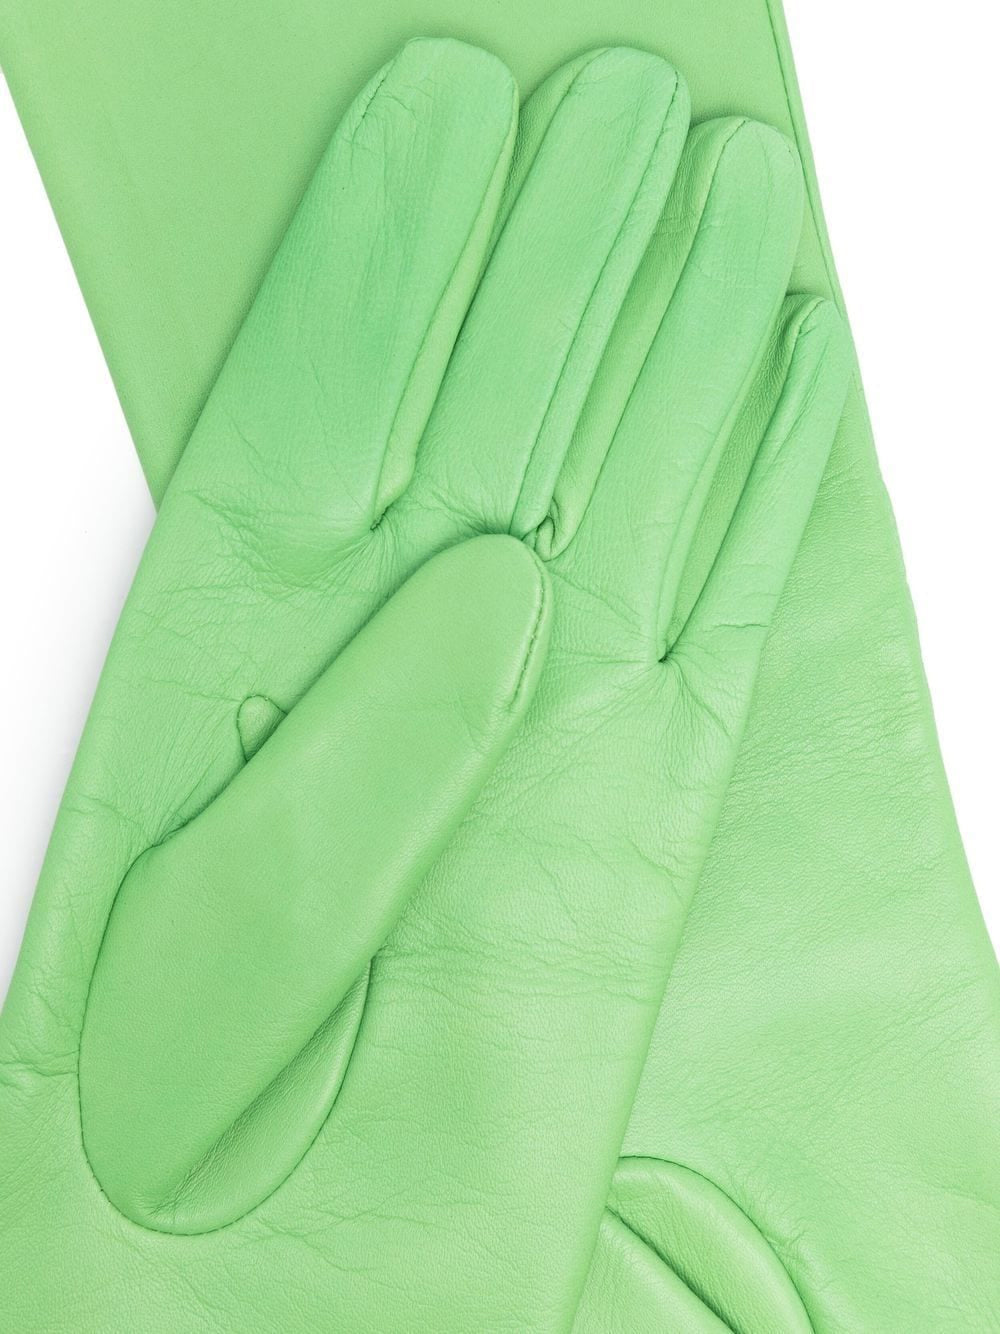 Full-sleeve leather gloves